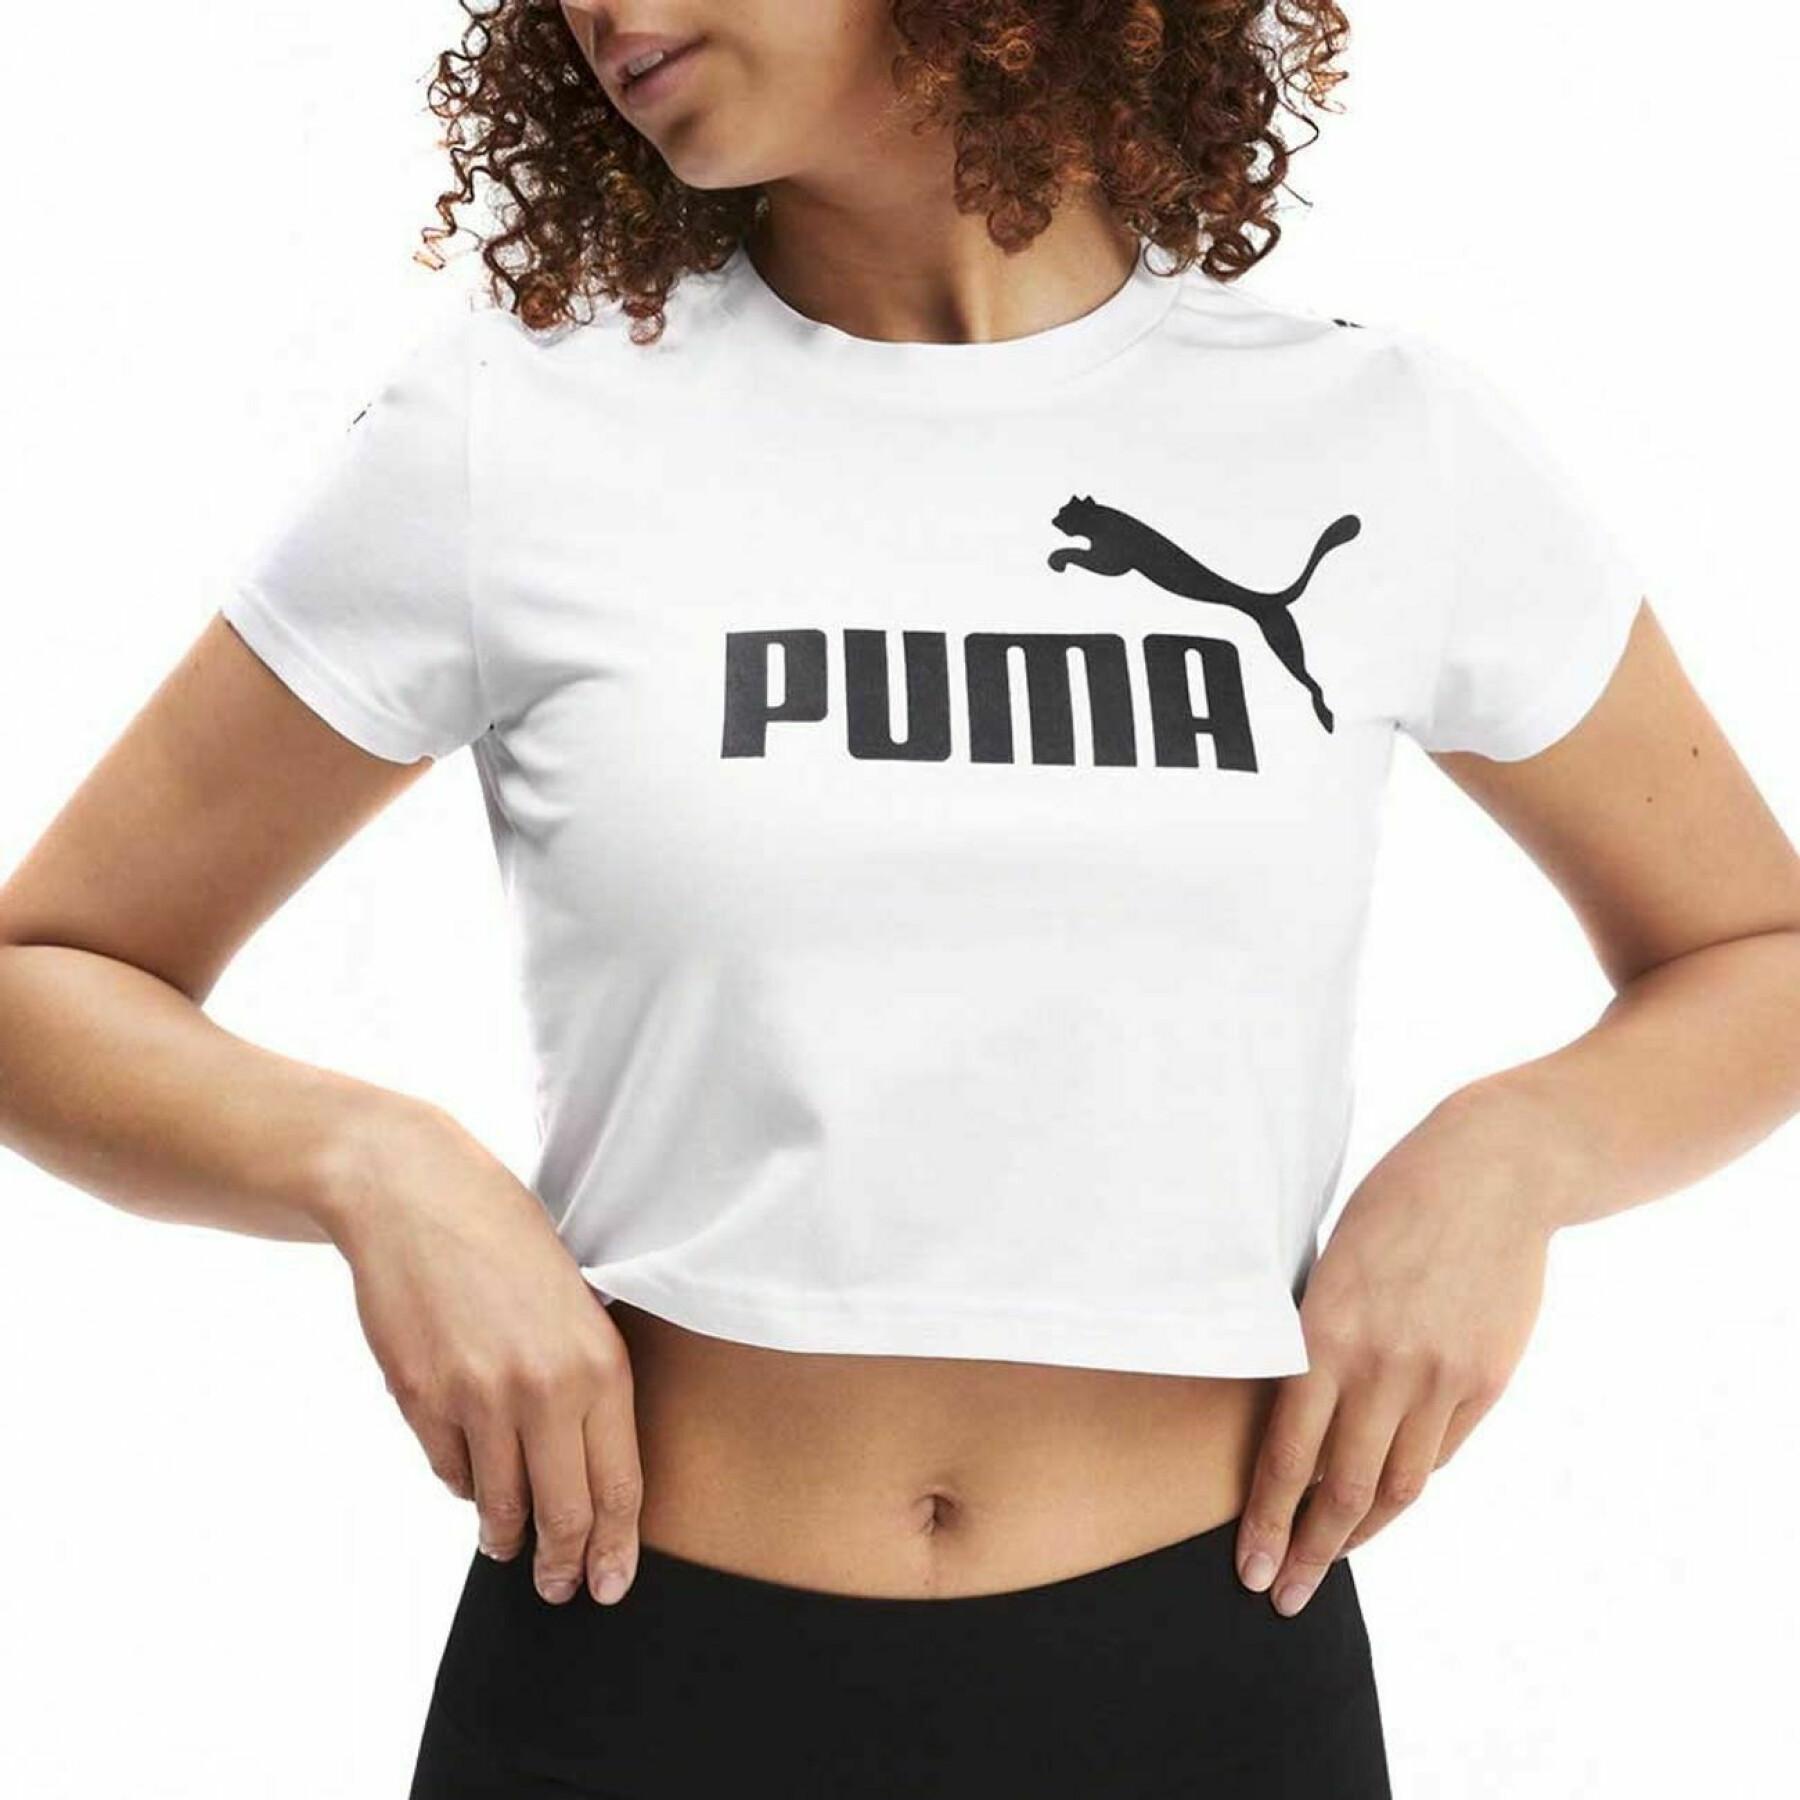 Koszulka damska Puma Amplified logo fitted